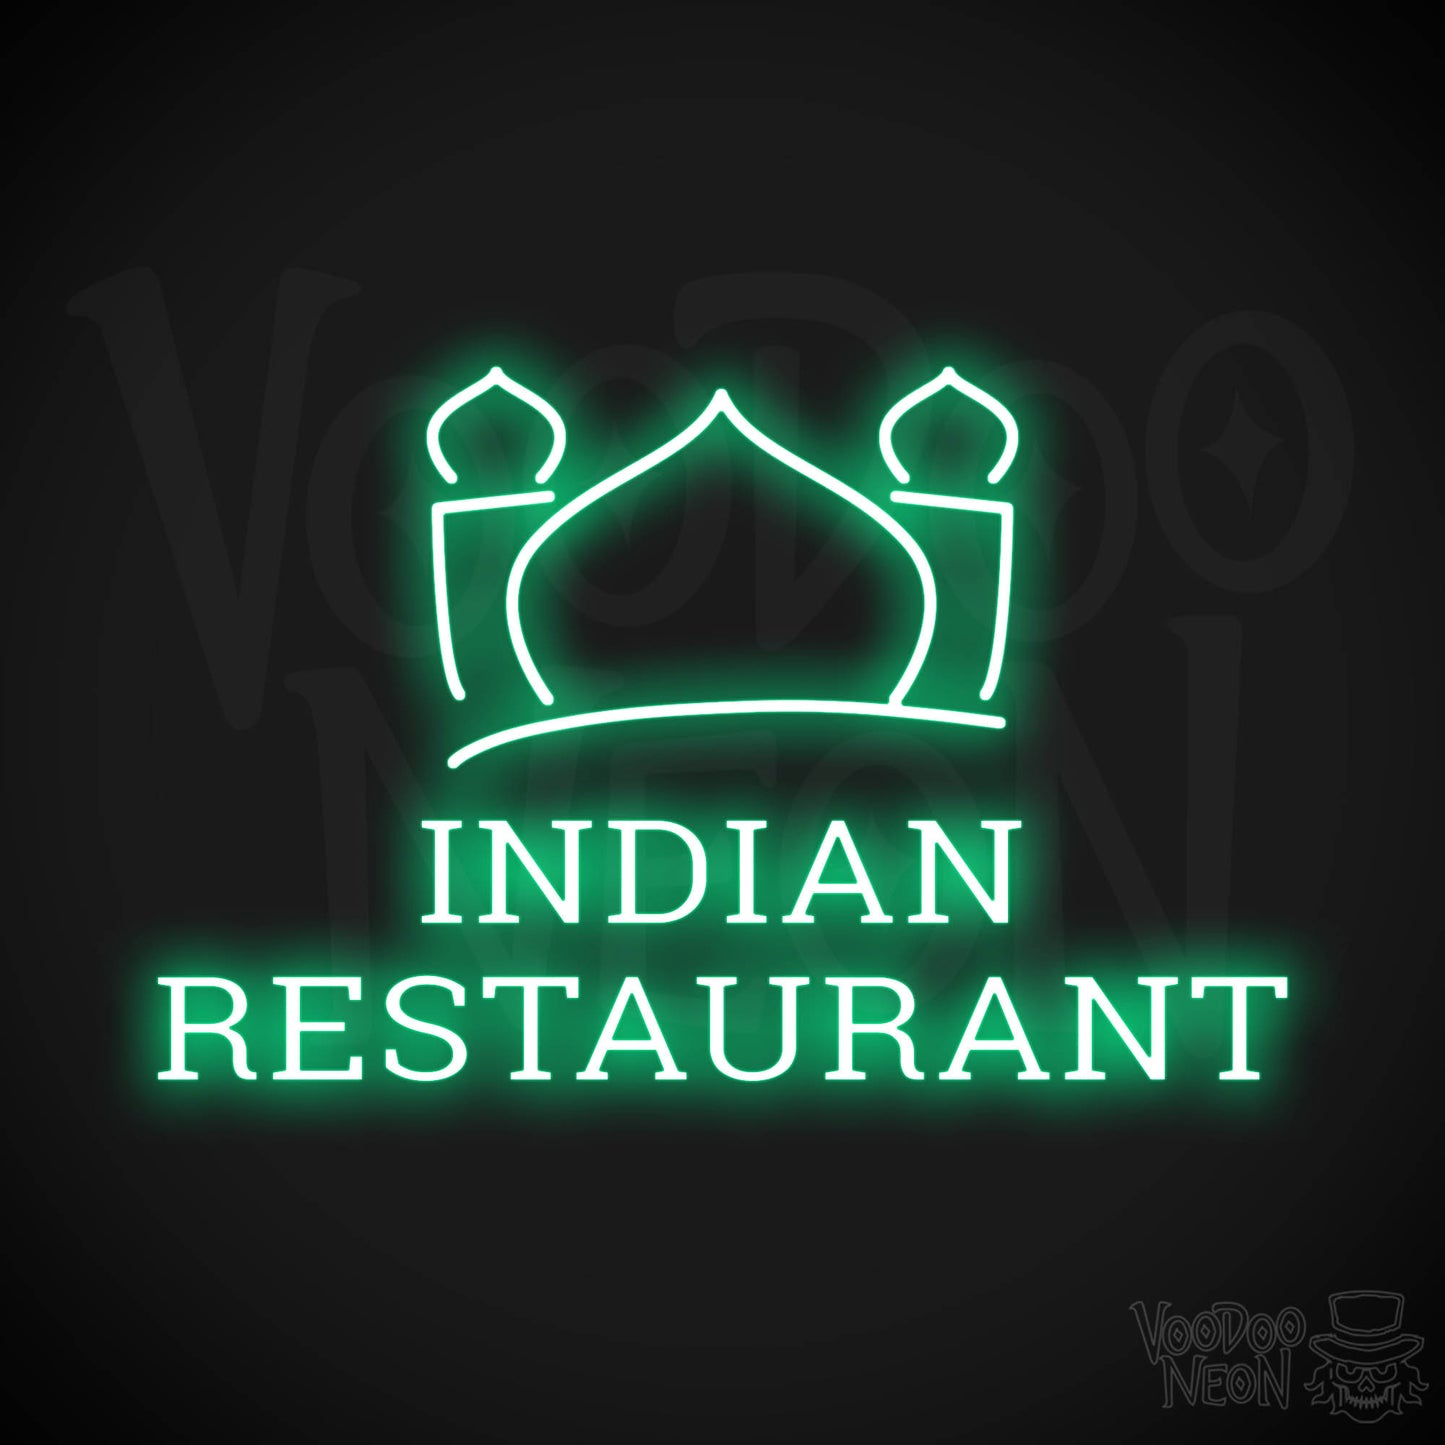 Indian Restaurant LED Neon - Green